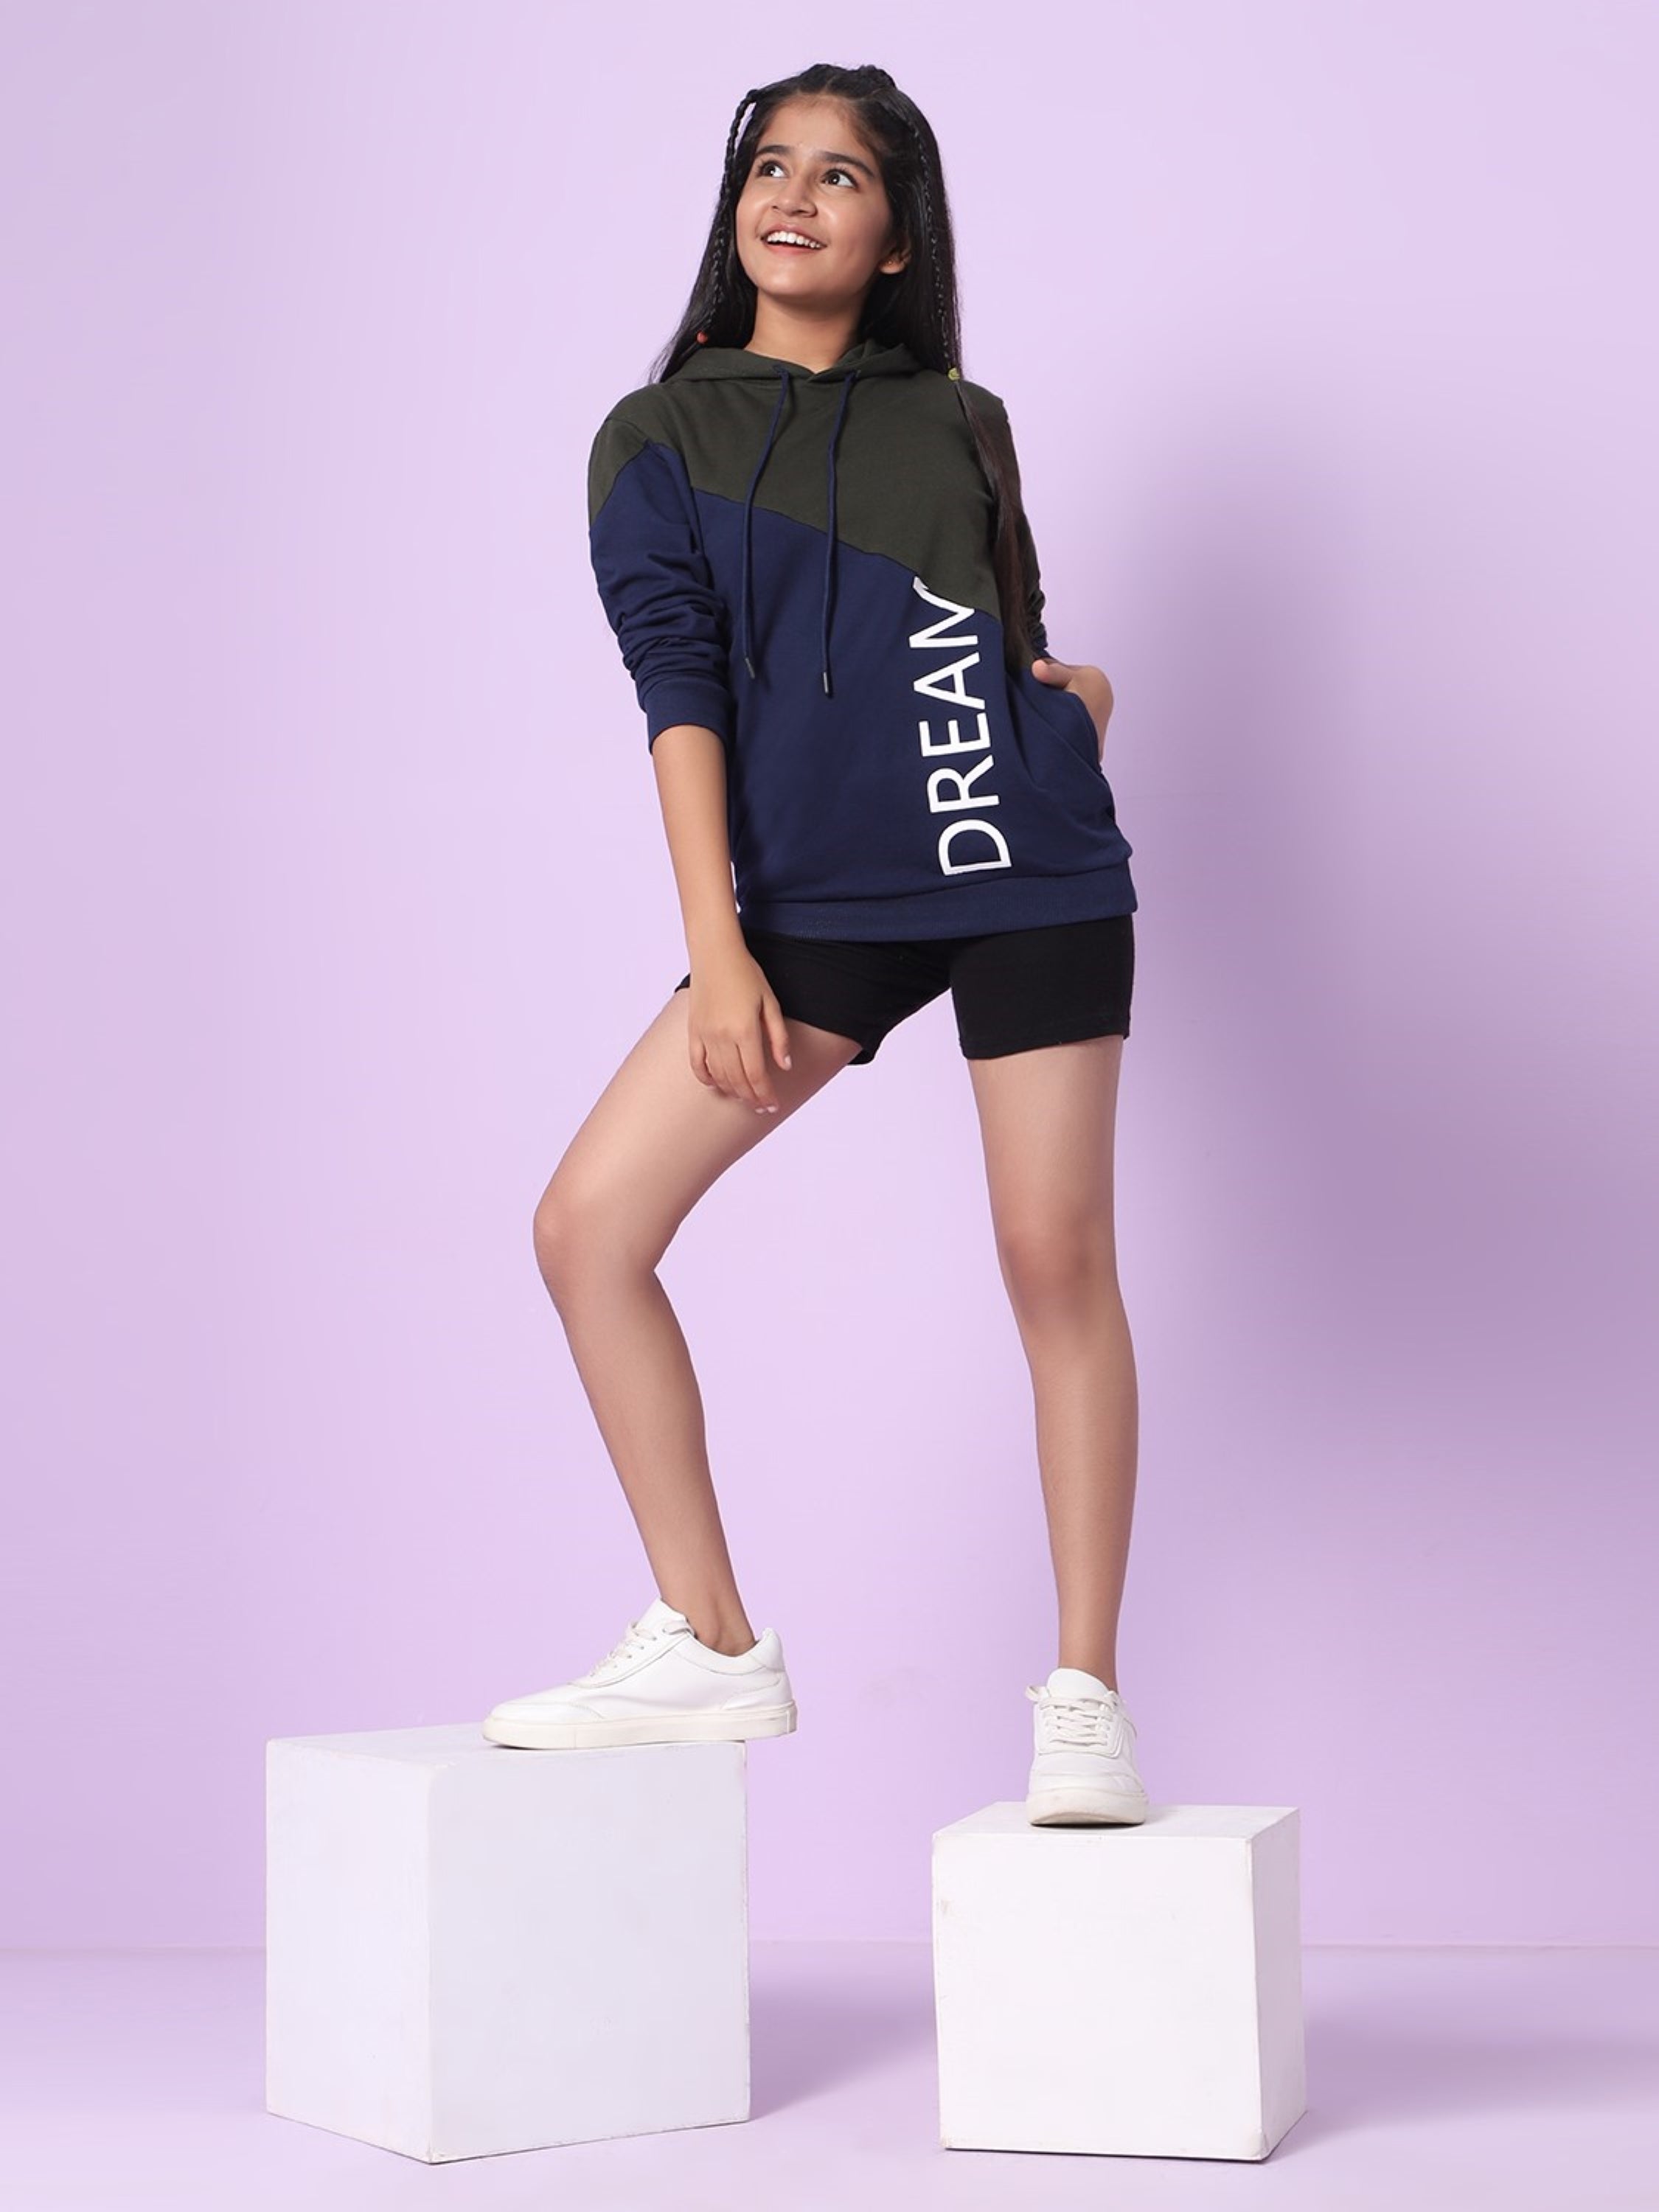 TeenTrums Unisex Sweatshirt with half on half pattern - Dreamer - Navy & Olive